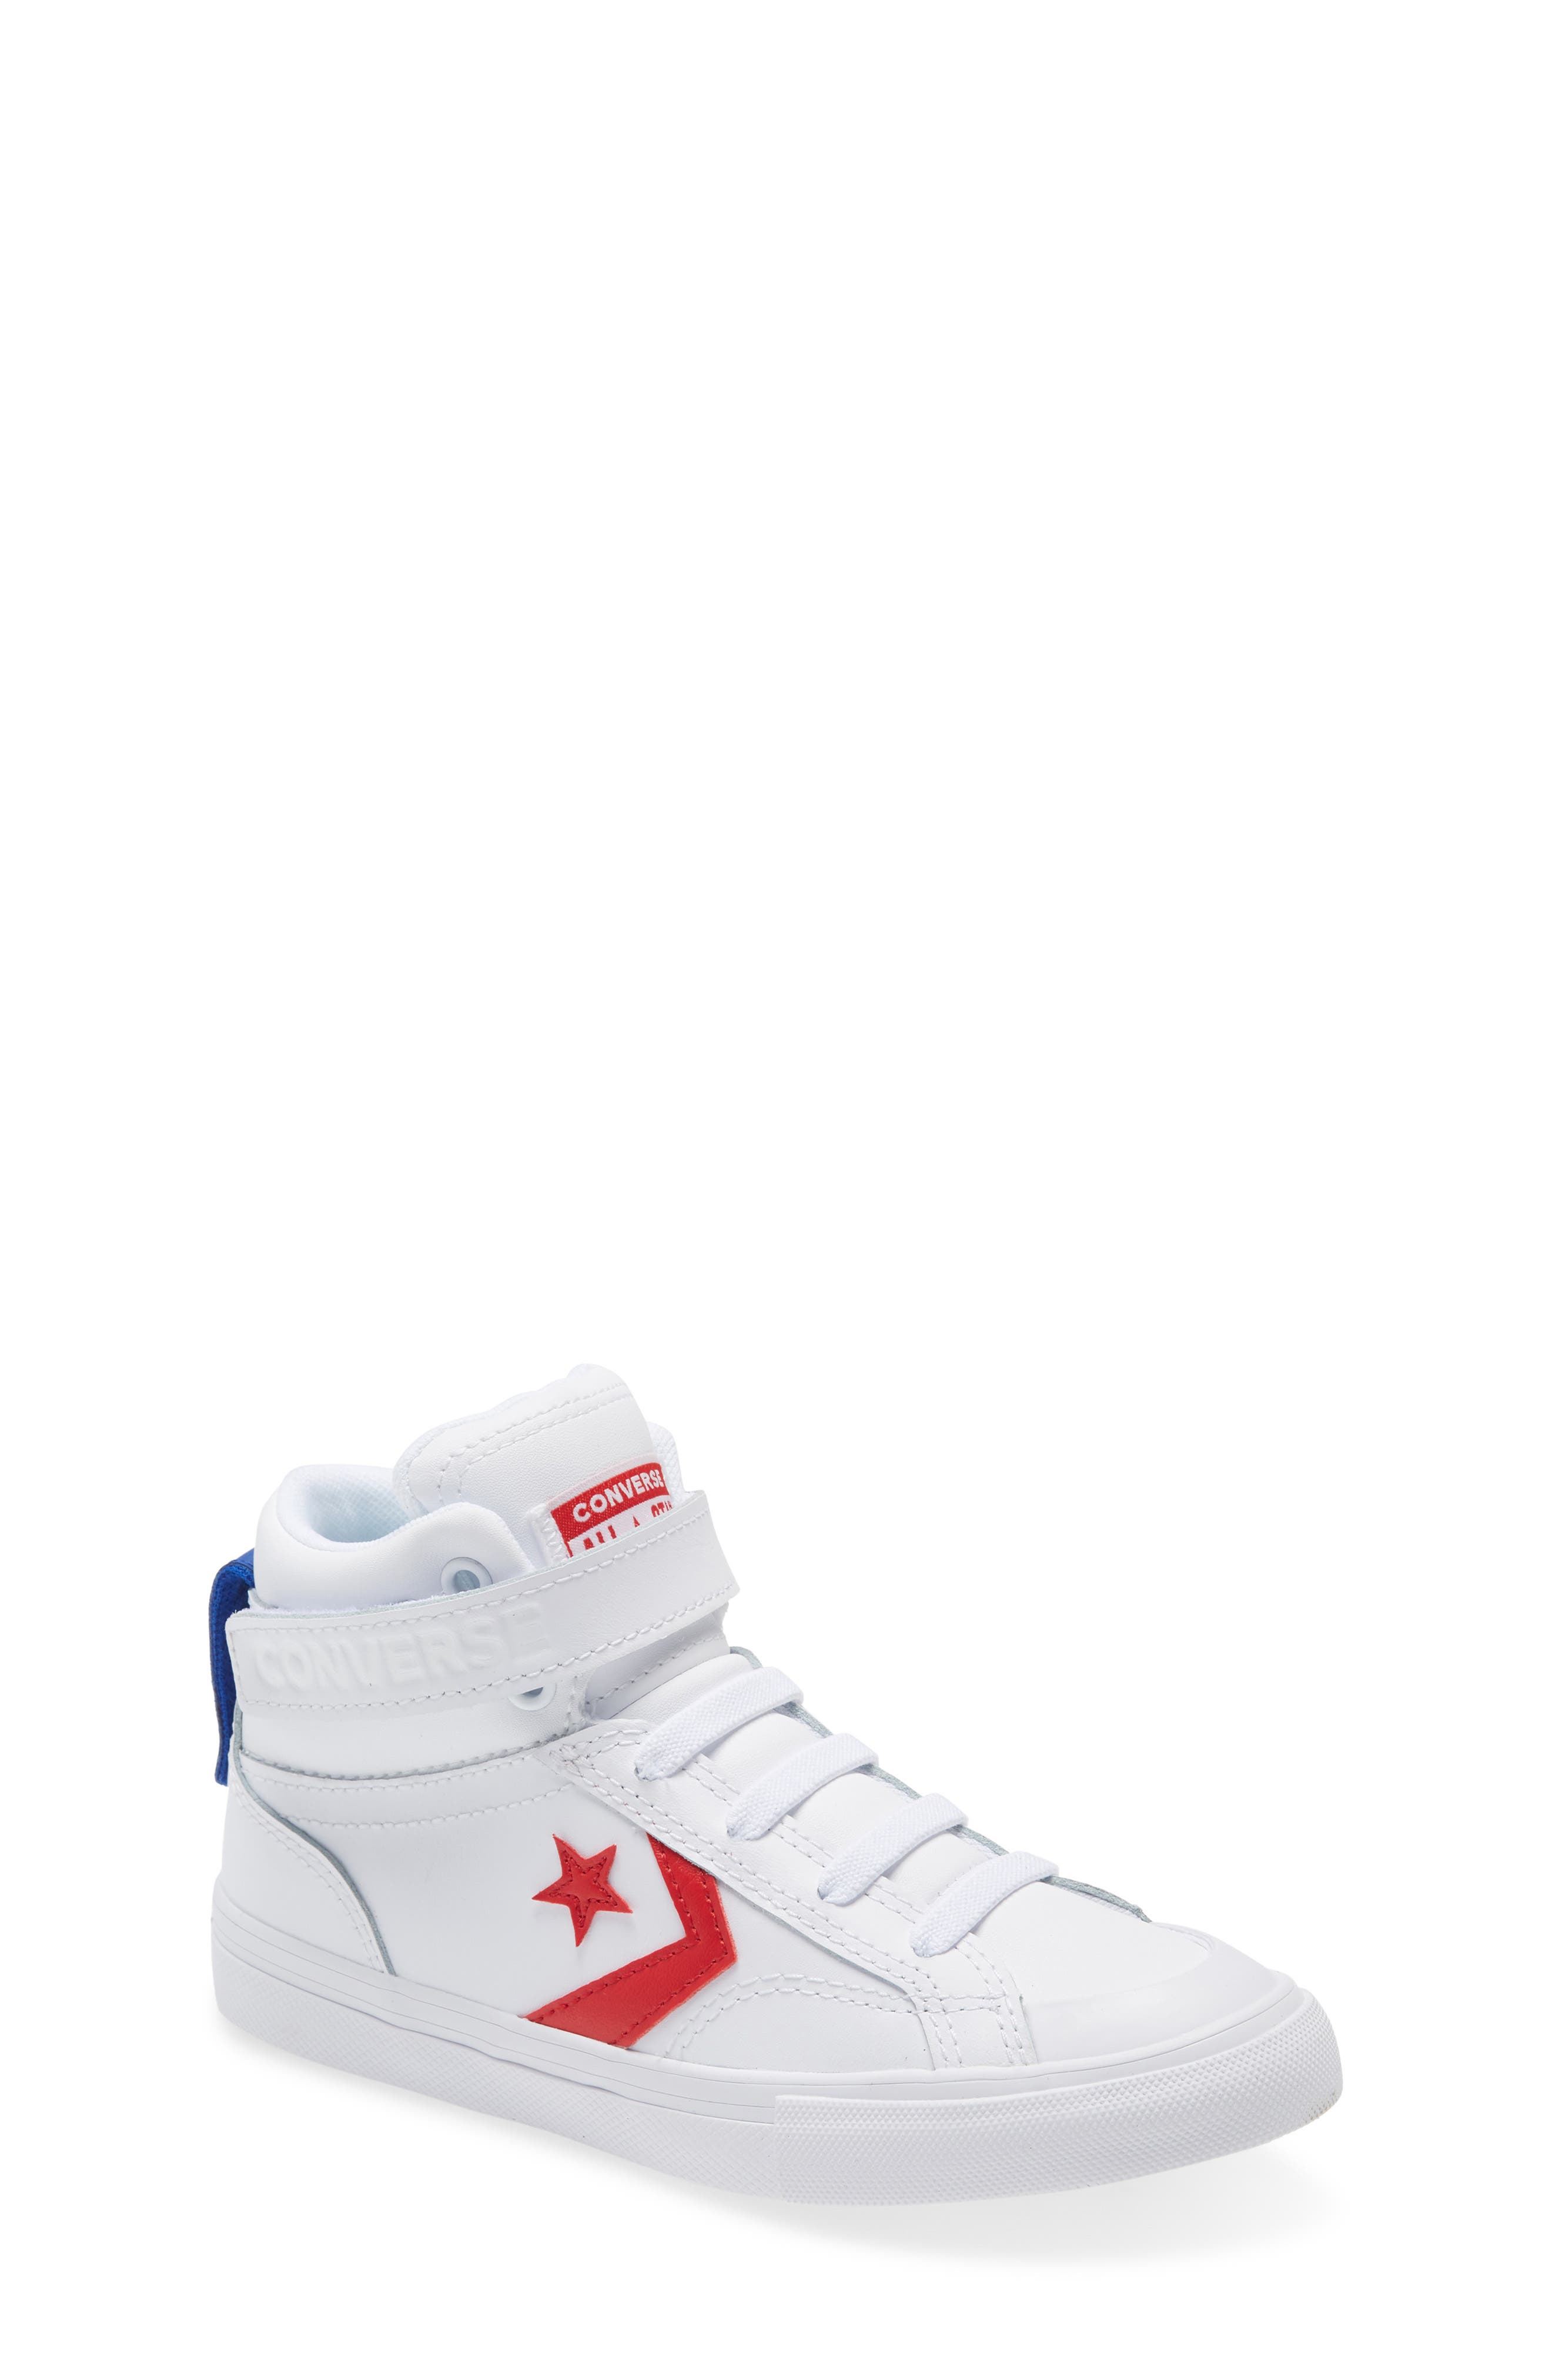 Converse All Star(R) Pro Blaze Hi Sneaker in White/University Red/Blue